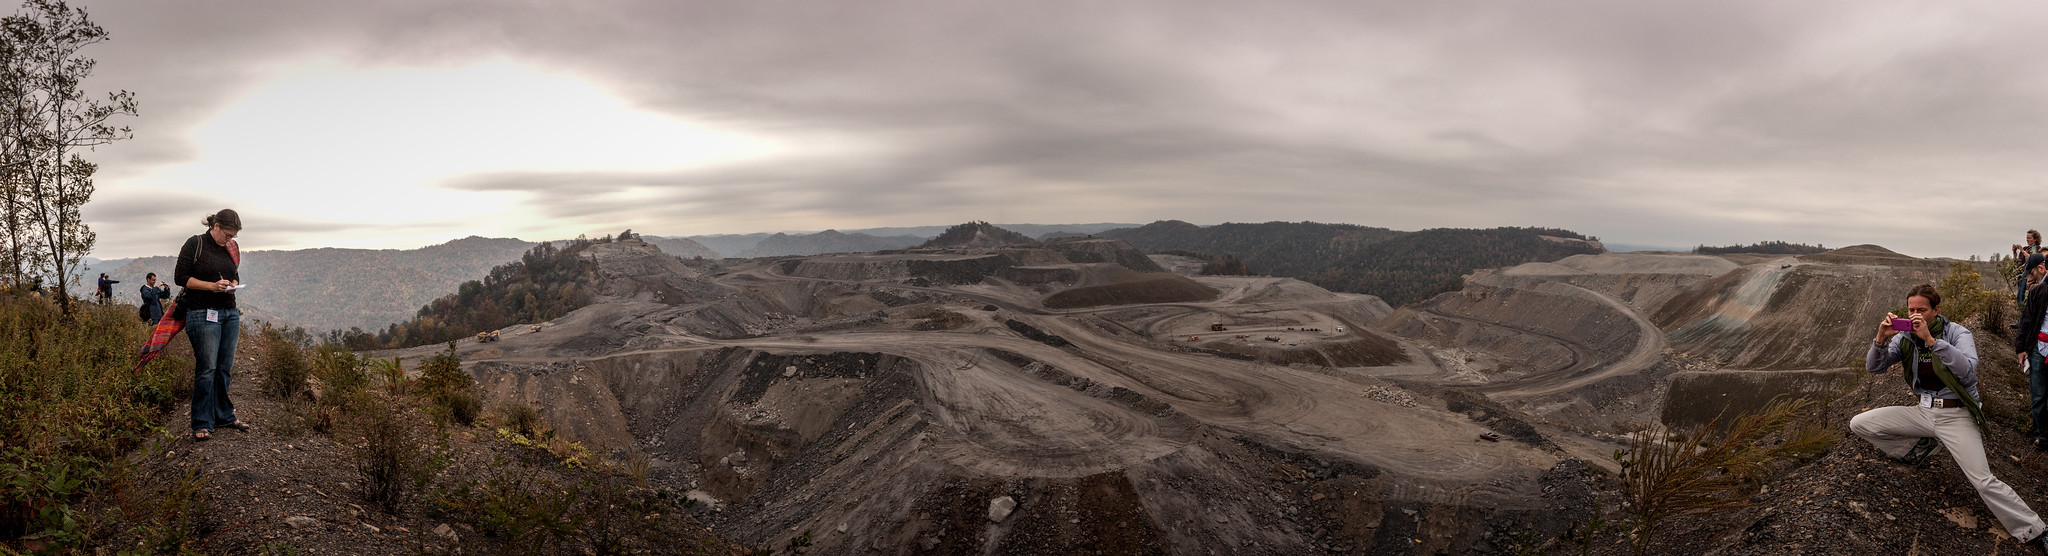 Mountain top coal mining